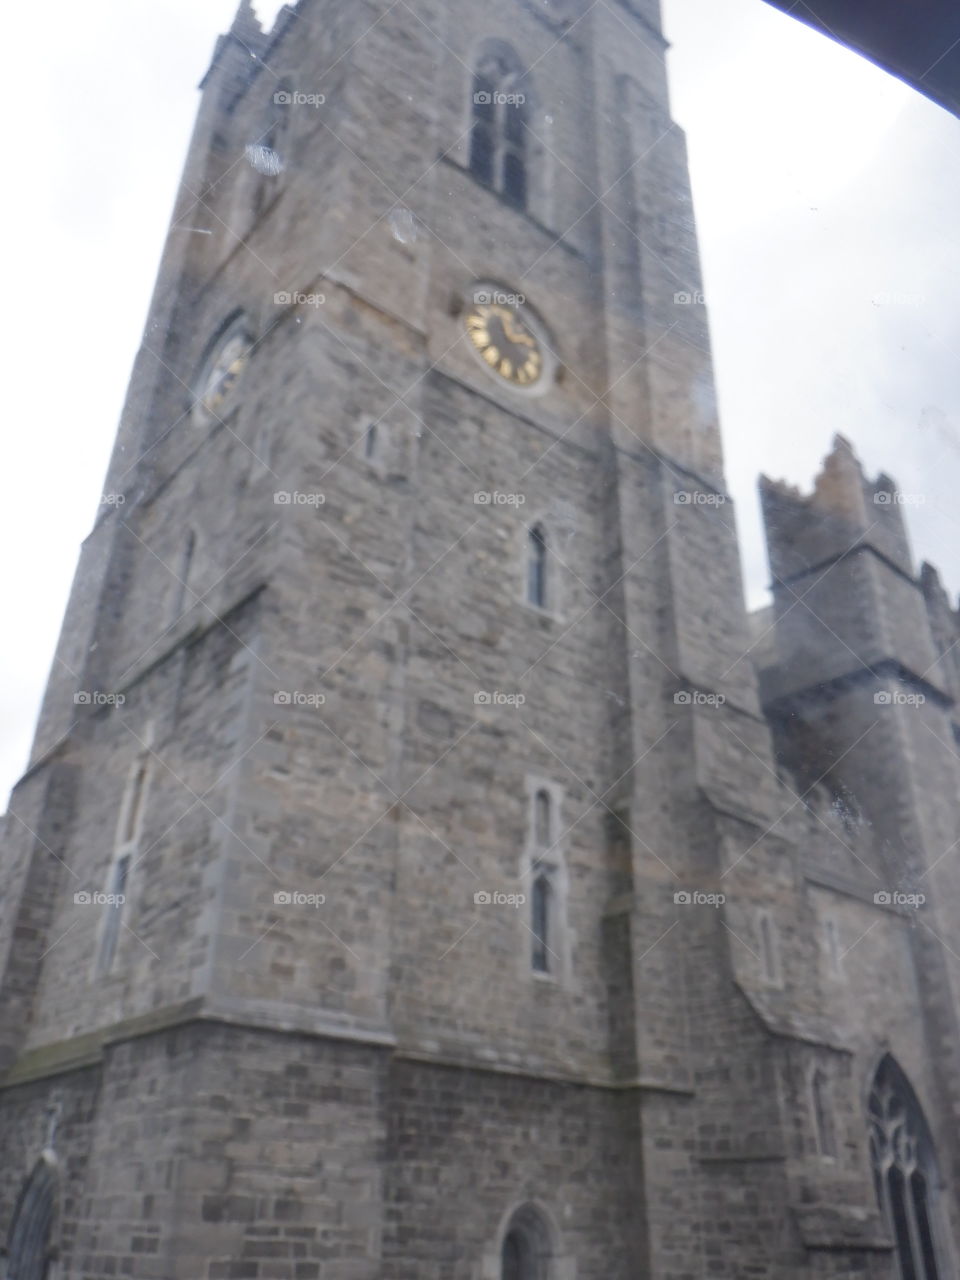 St. Patrick’s Cathedral, Dublin, Ireland